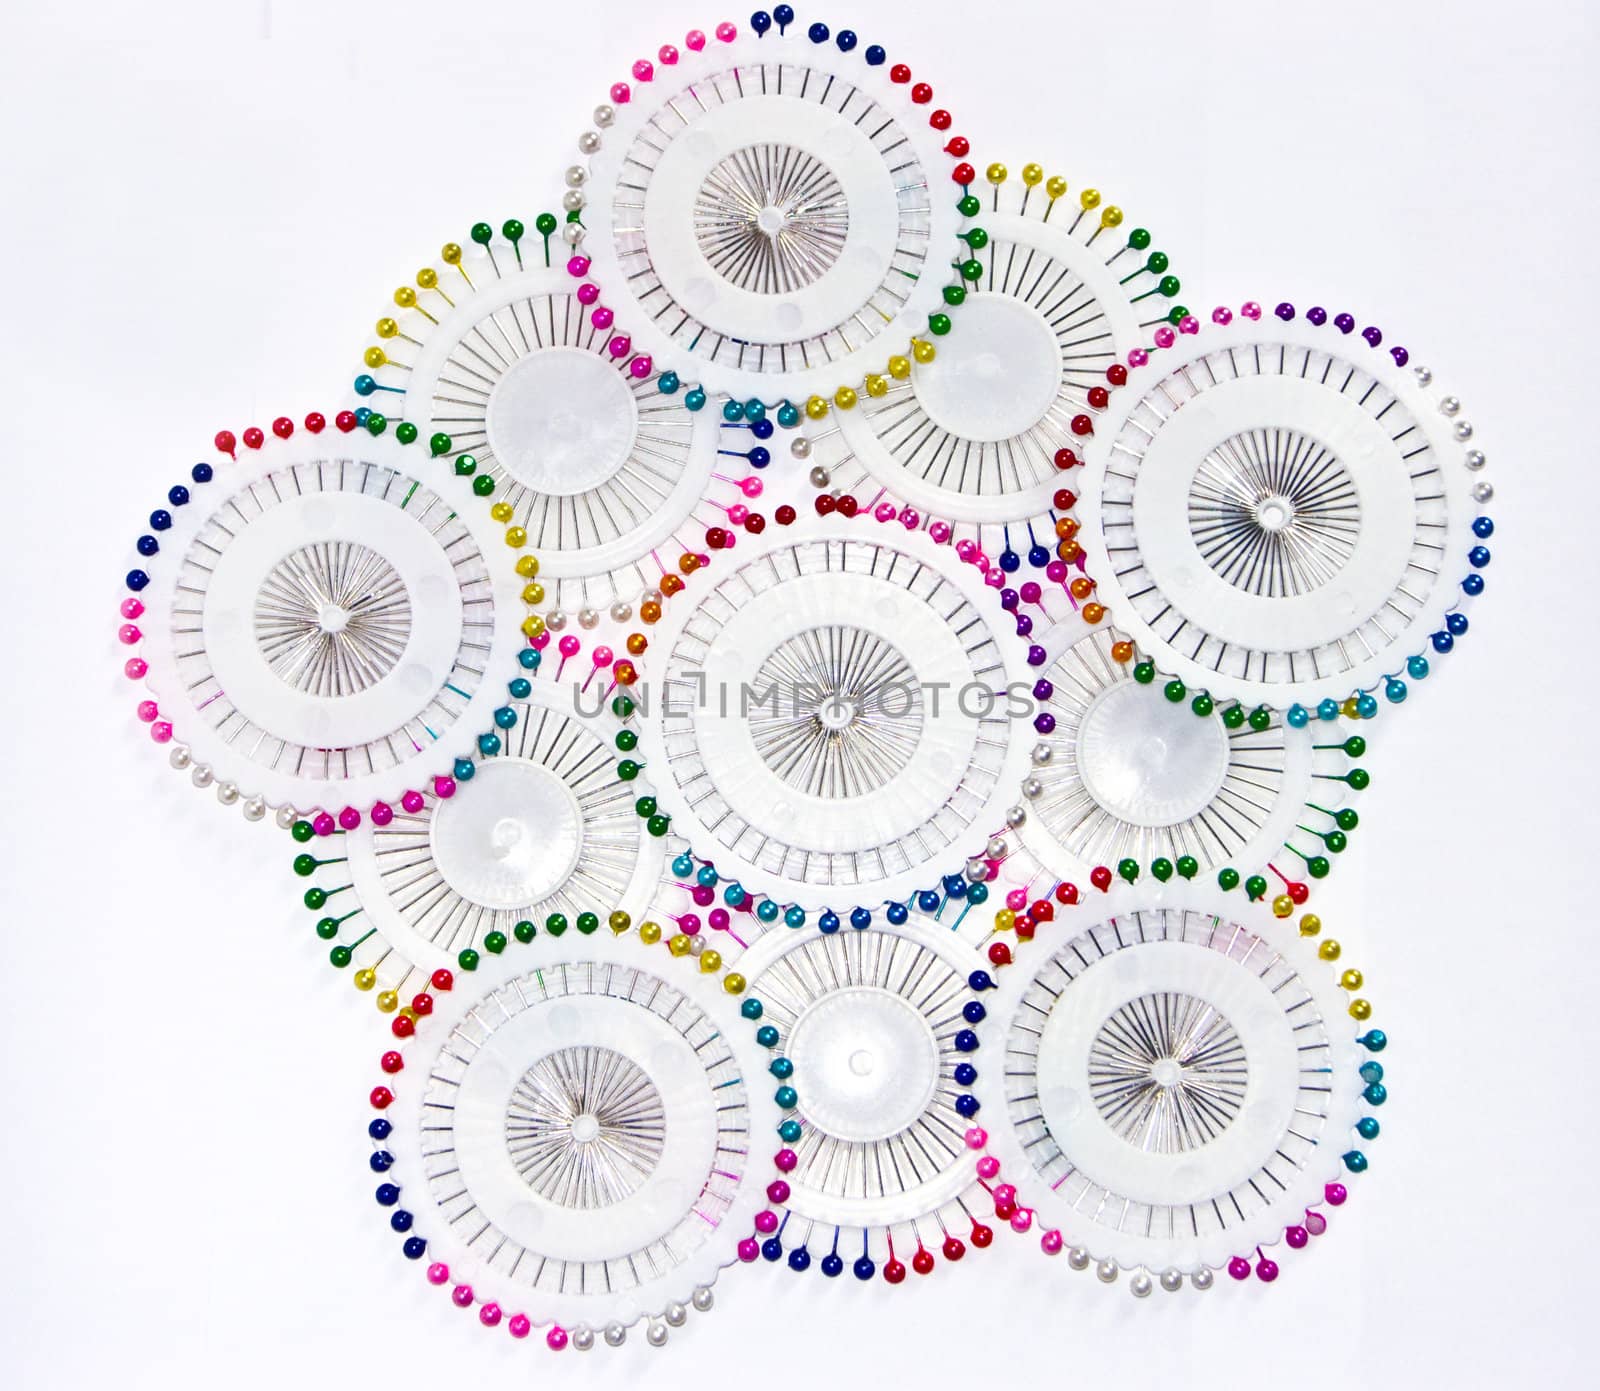 Multi-coloured needles 4 by soloir